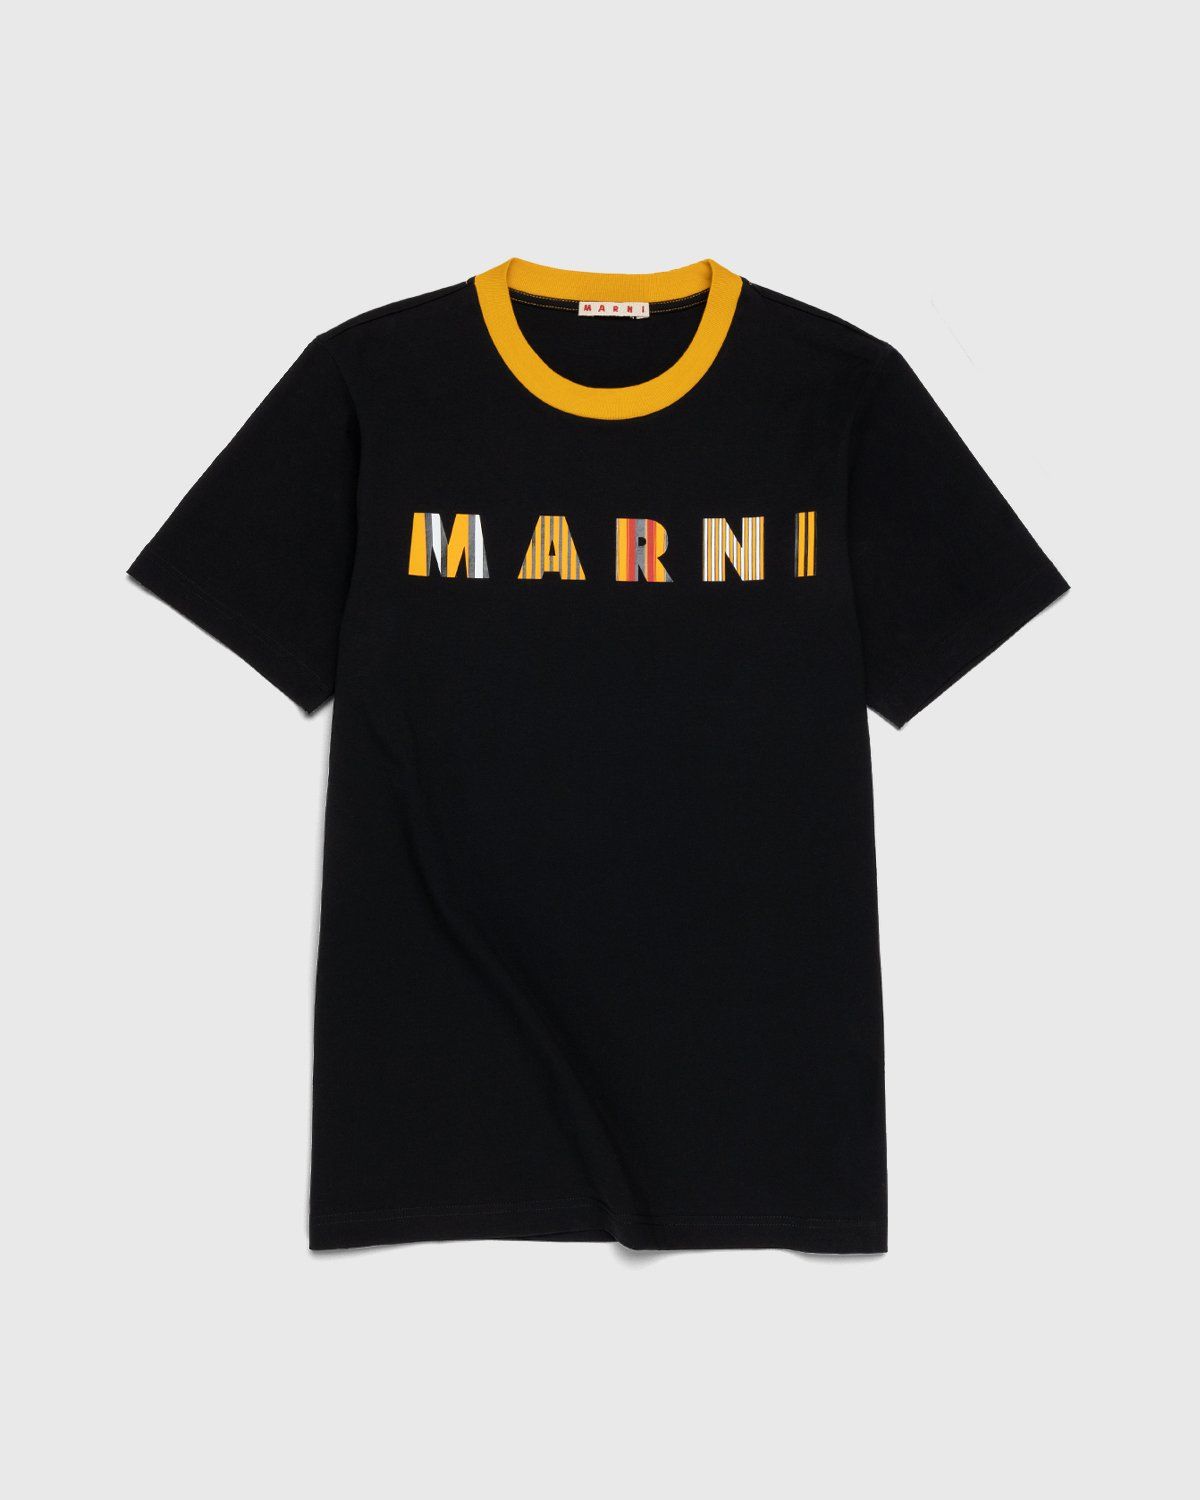 Marni – Stripe Logo Bio Jersey T-Shirt Black/Gold - Tops - Yellow - Image 1